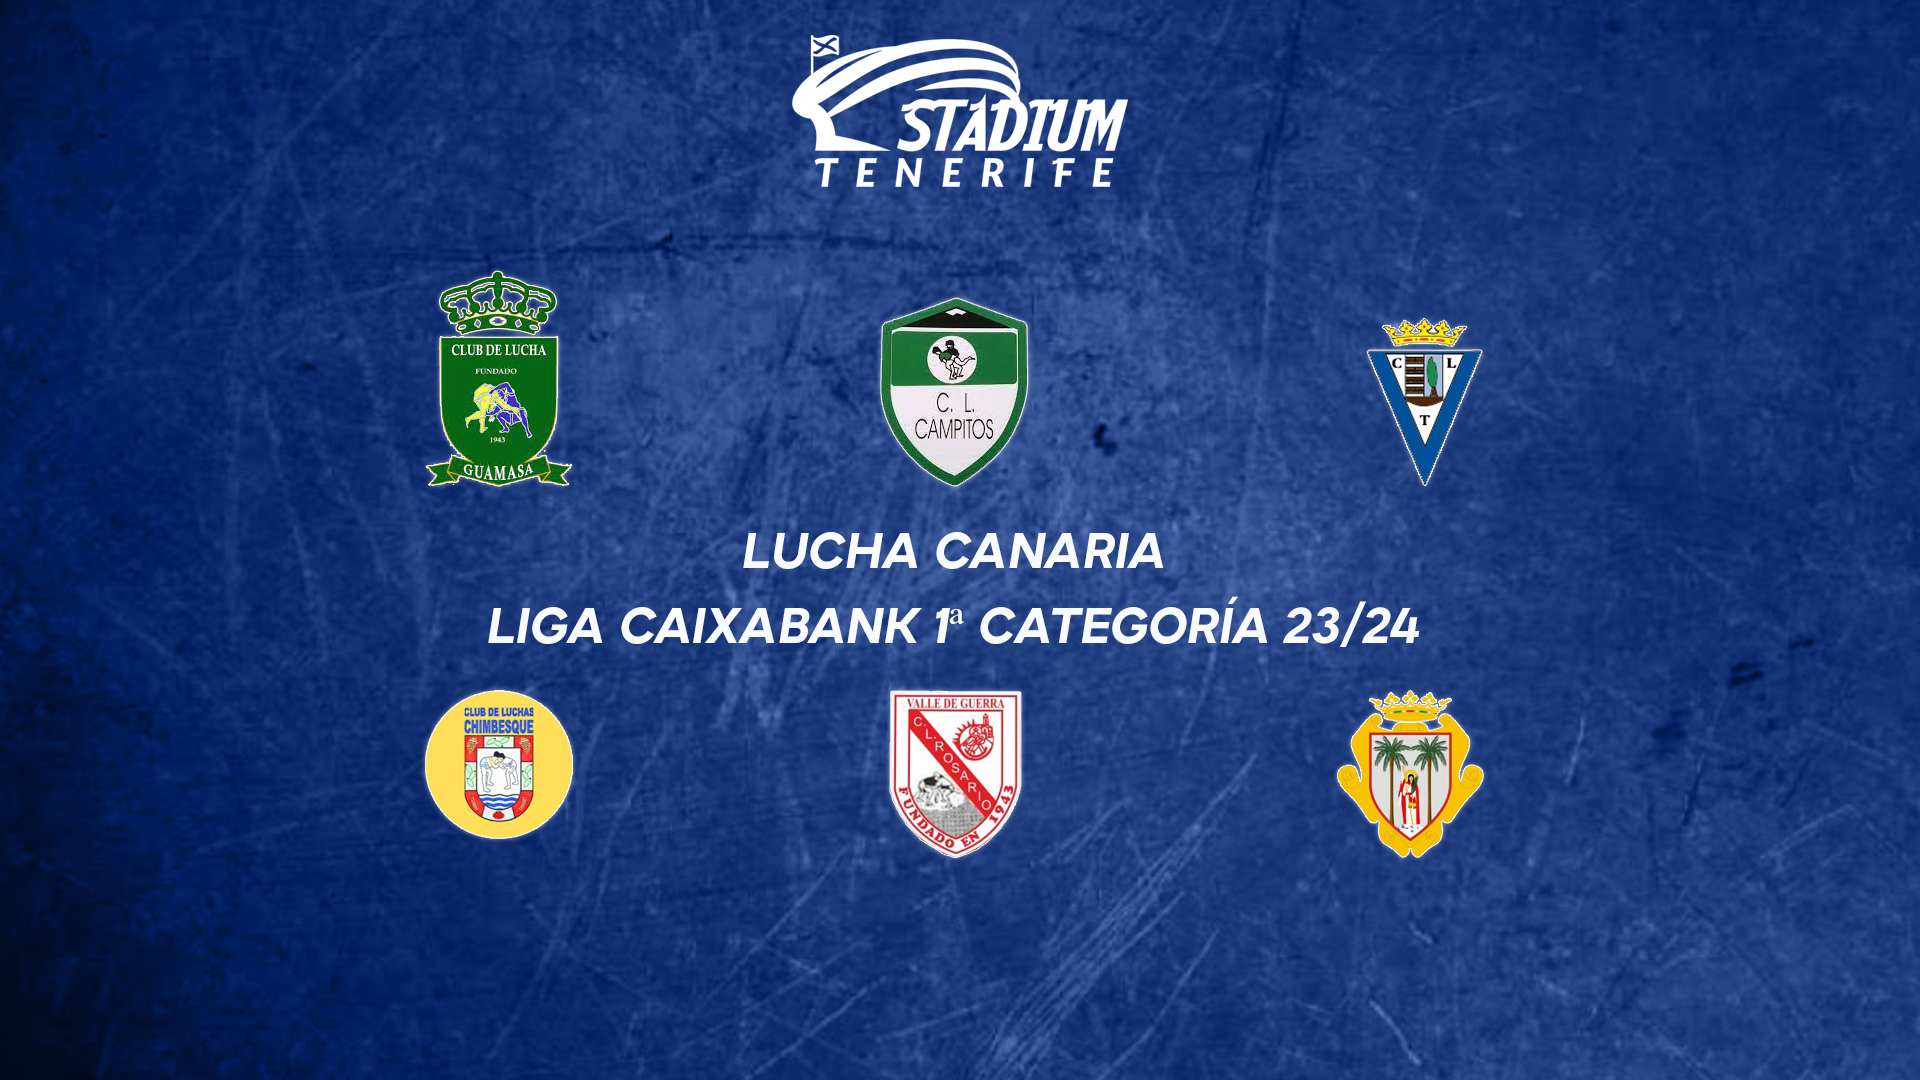 PREVIA | 1ª jornada de la Liga CaixaBank de Lucha Canaria (21 y 22 de octubre)